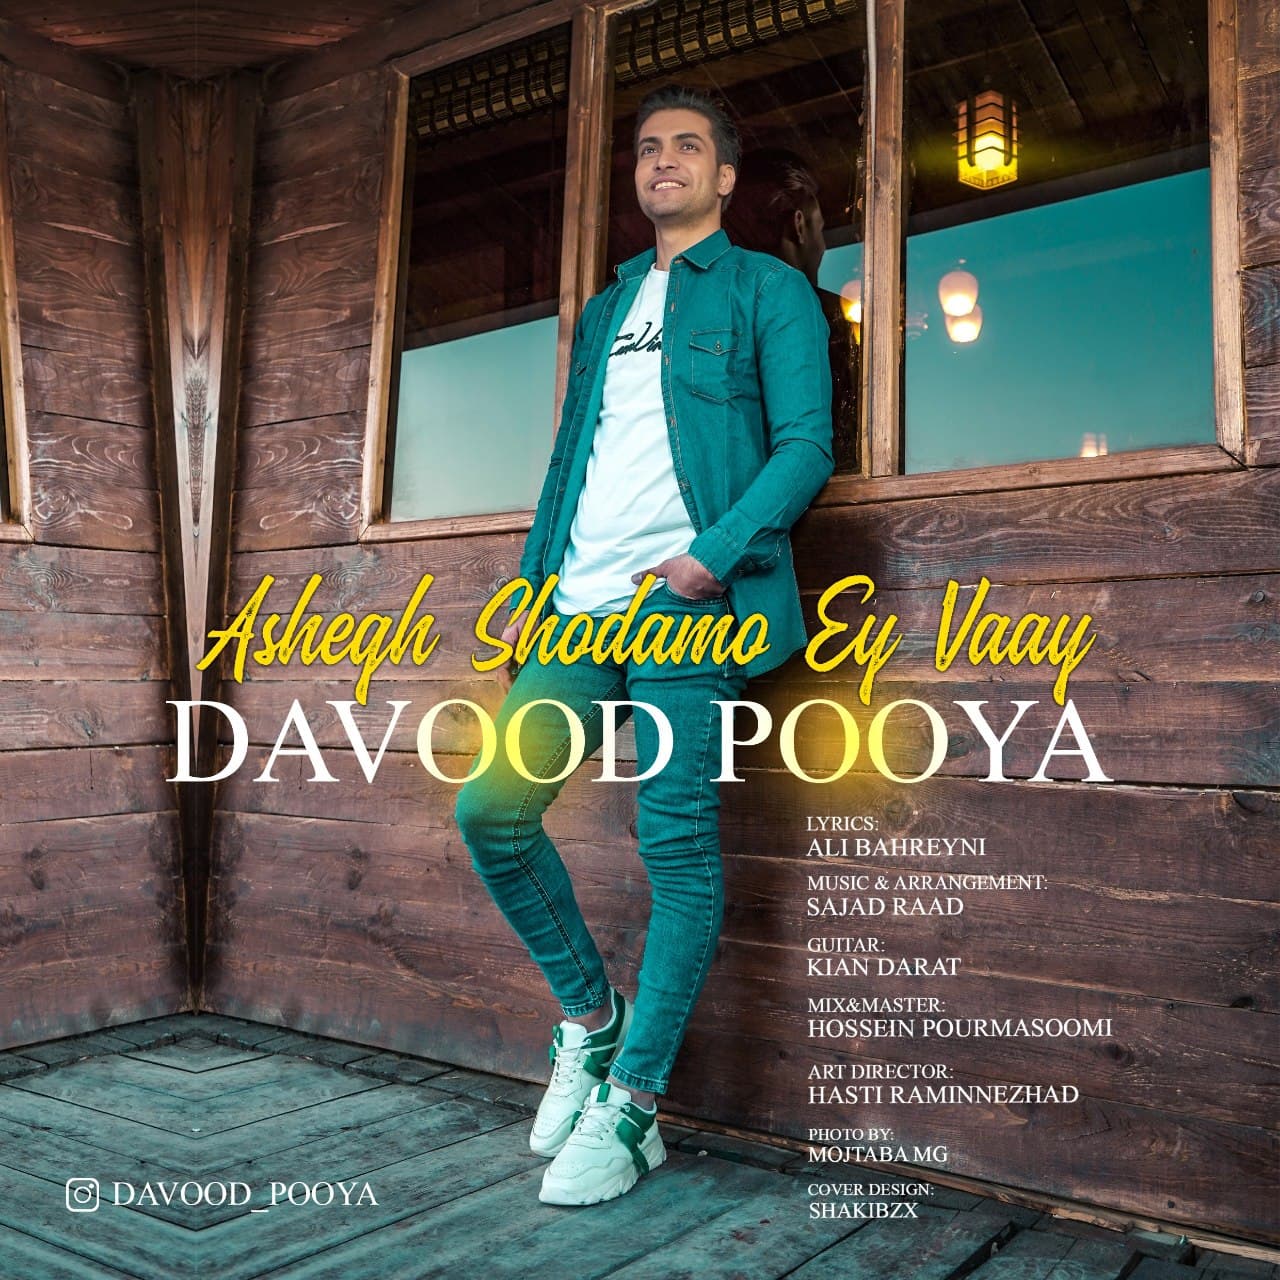 Davood Pouya – Ashegh Shodamo Ey Vay